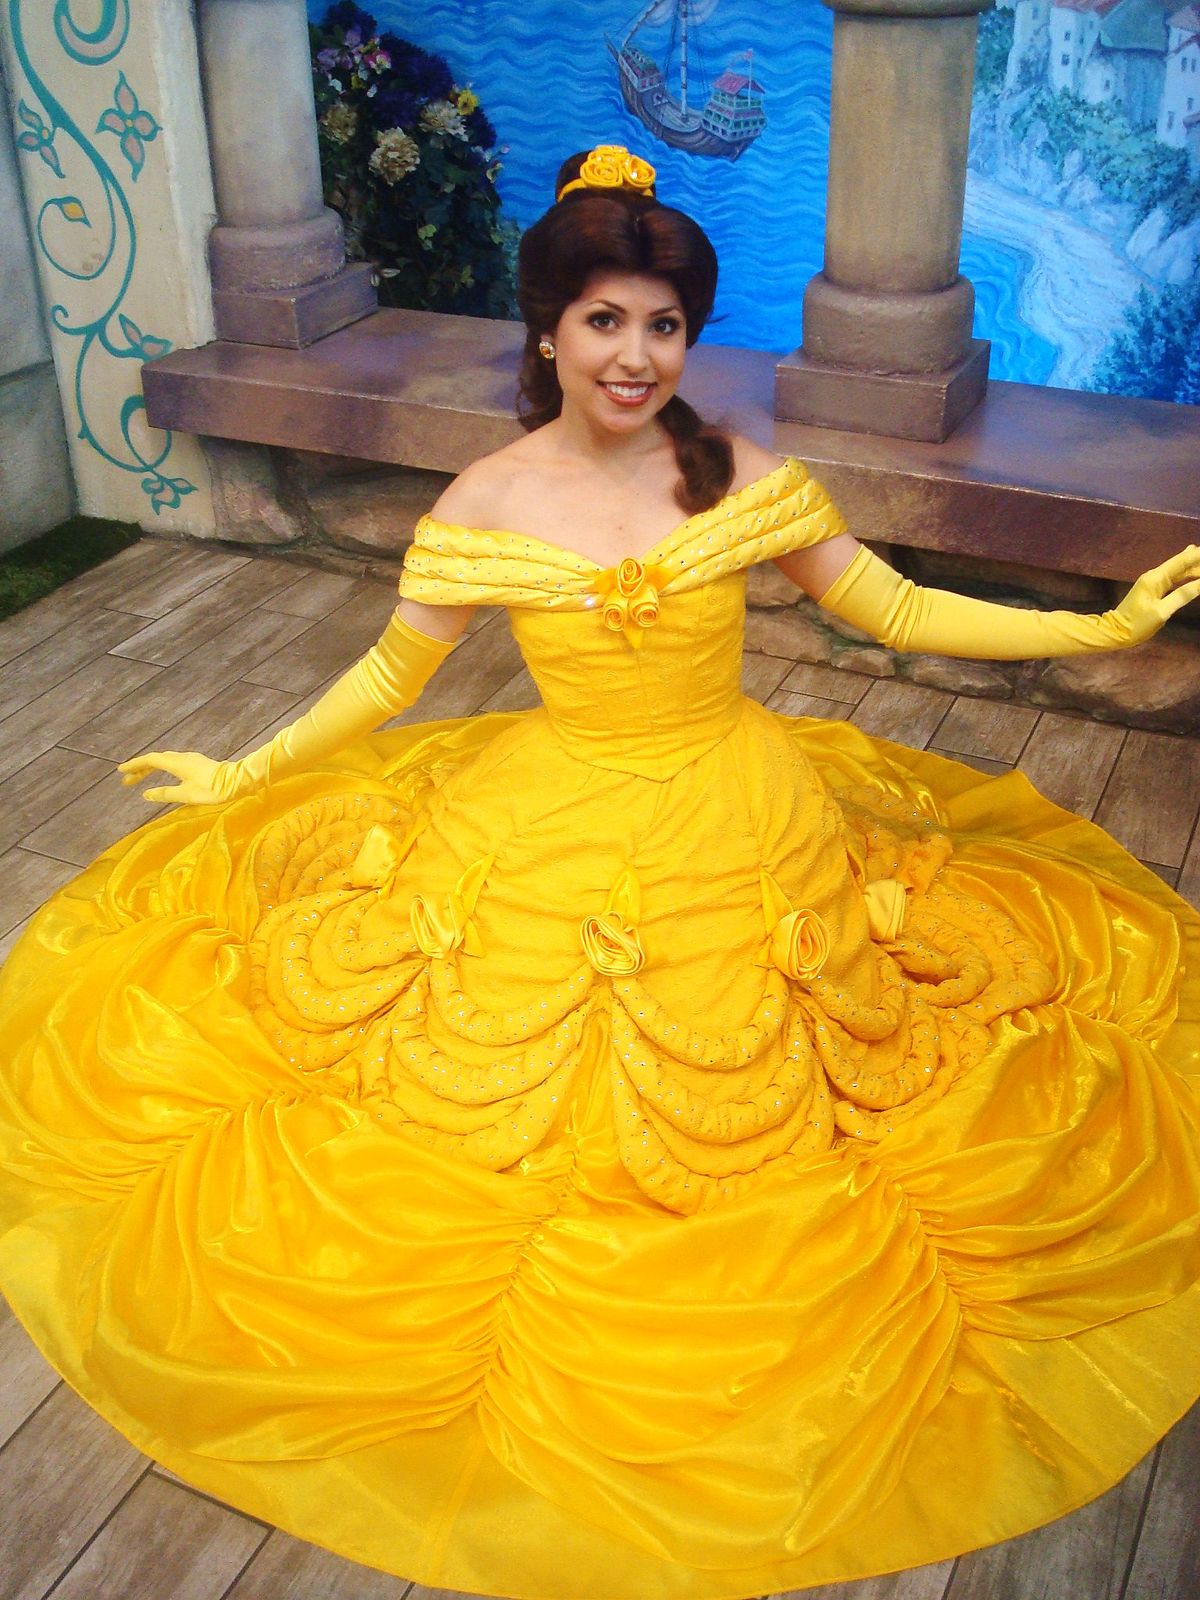 Belle Disney Princess Hair Tutorial - YouTube